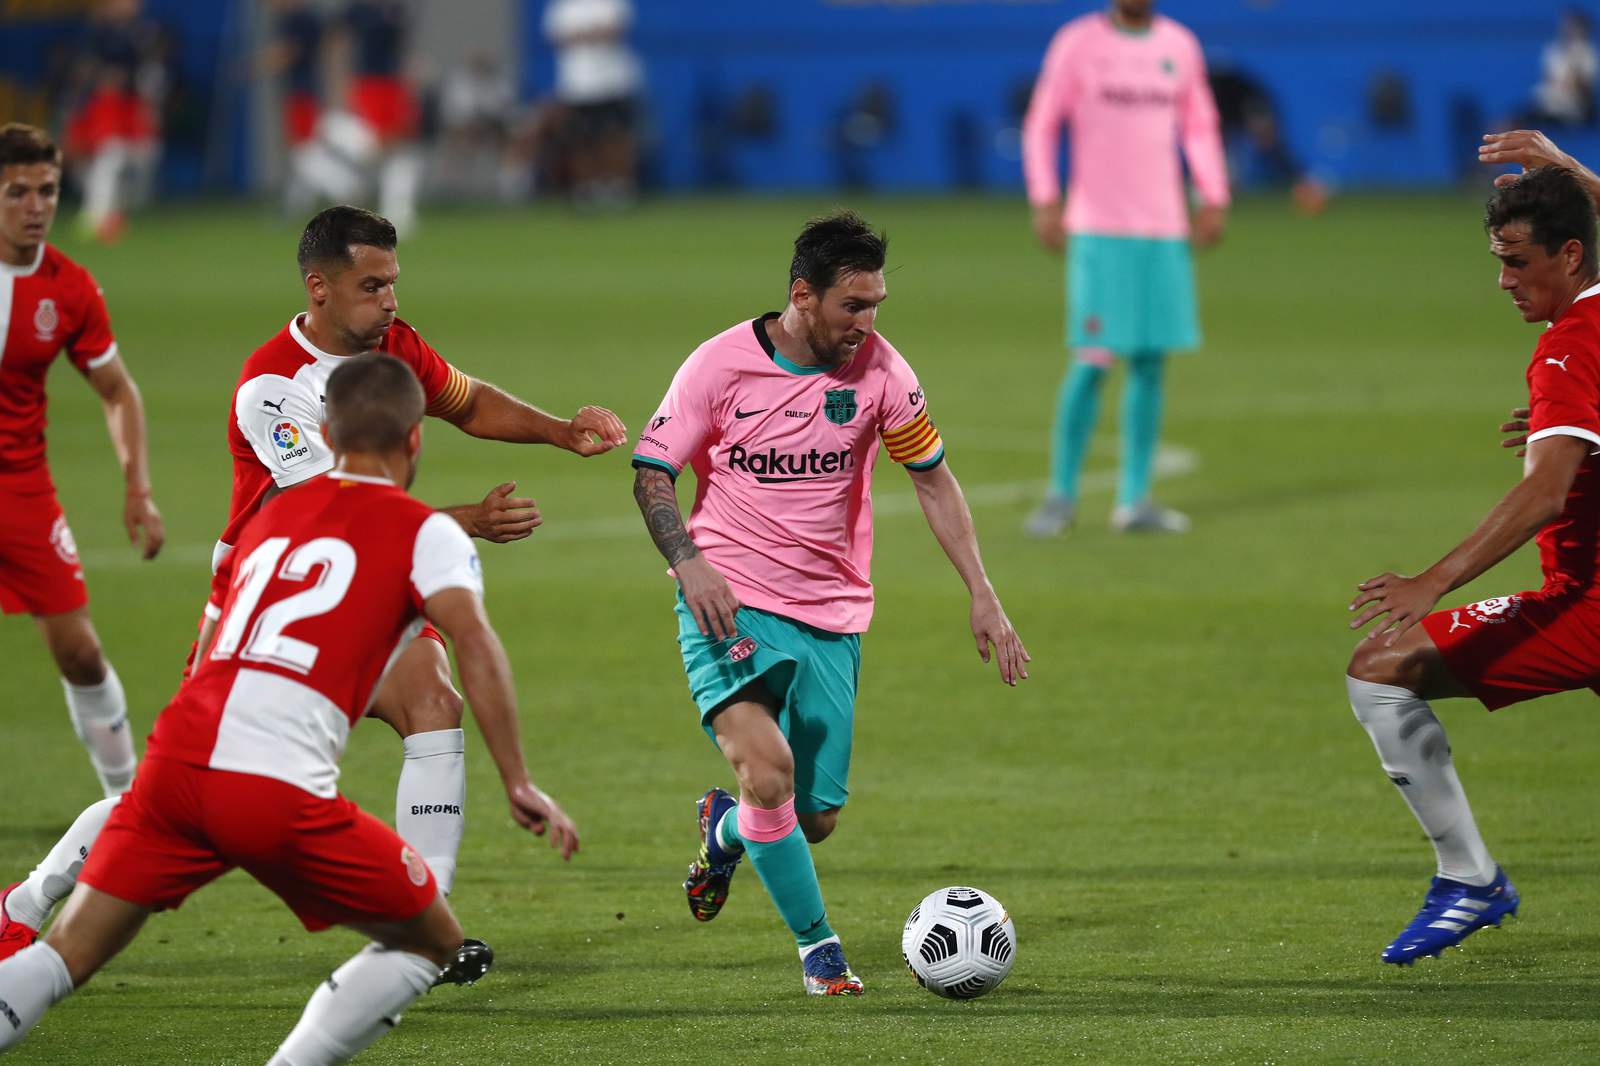 Revamped Barcelona starts new season with spotlight on Messi